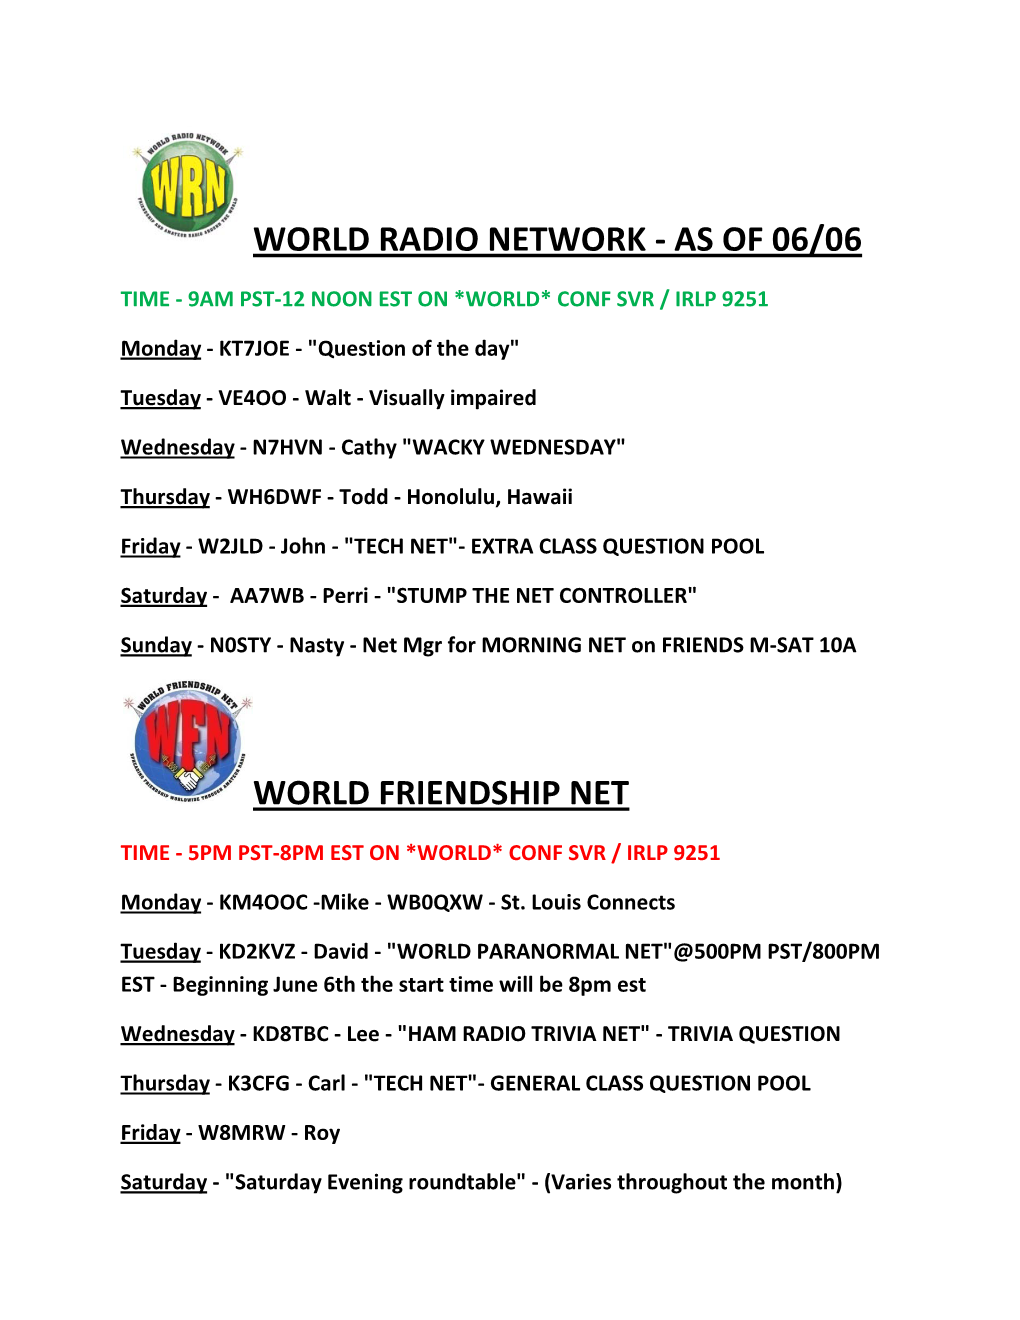 World Radio Network - As of 06/06